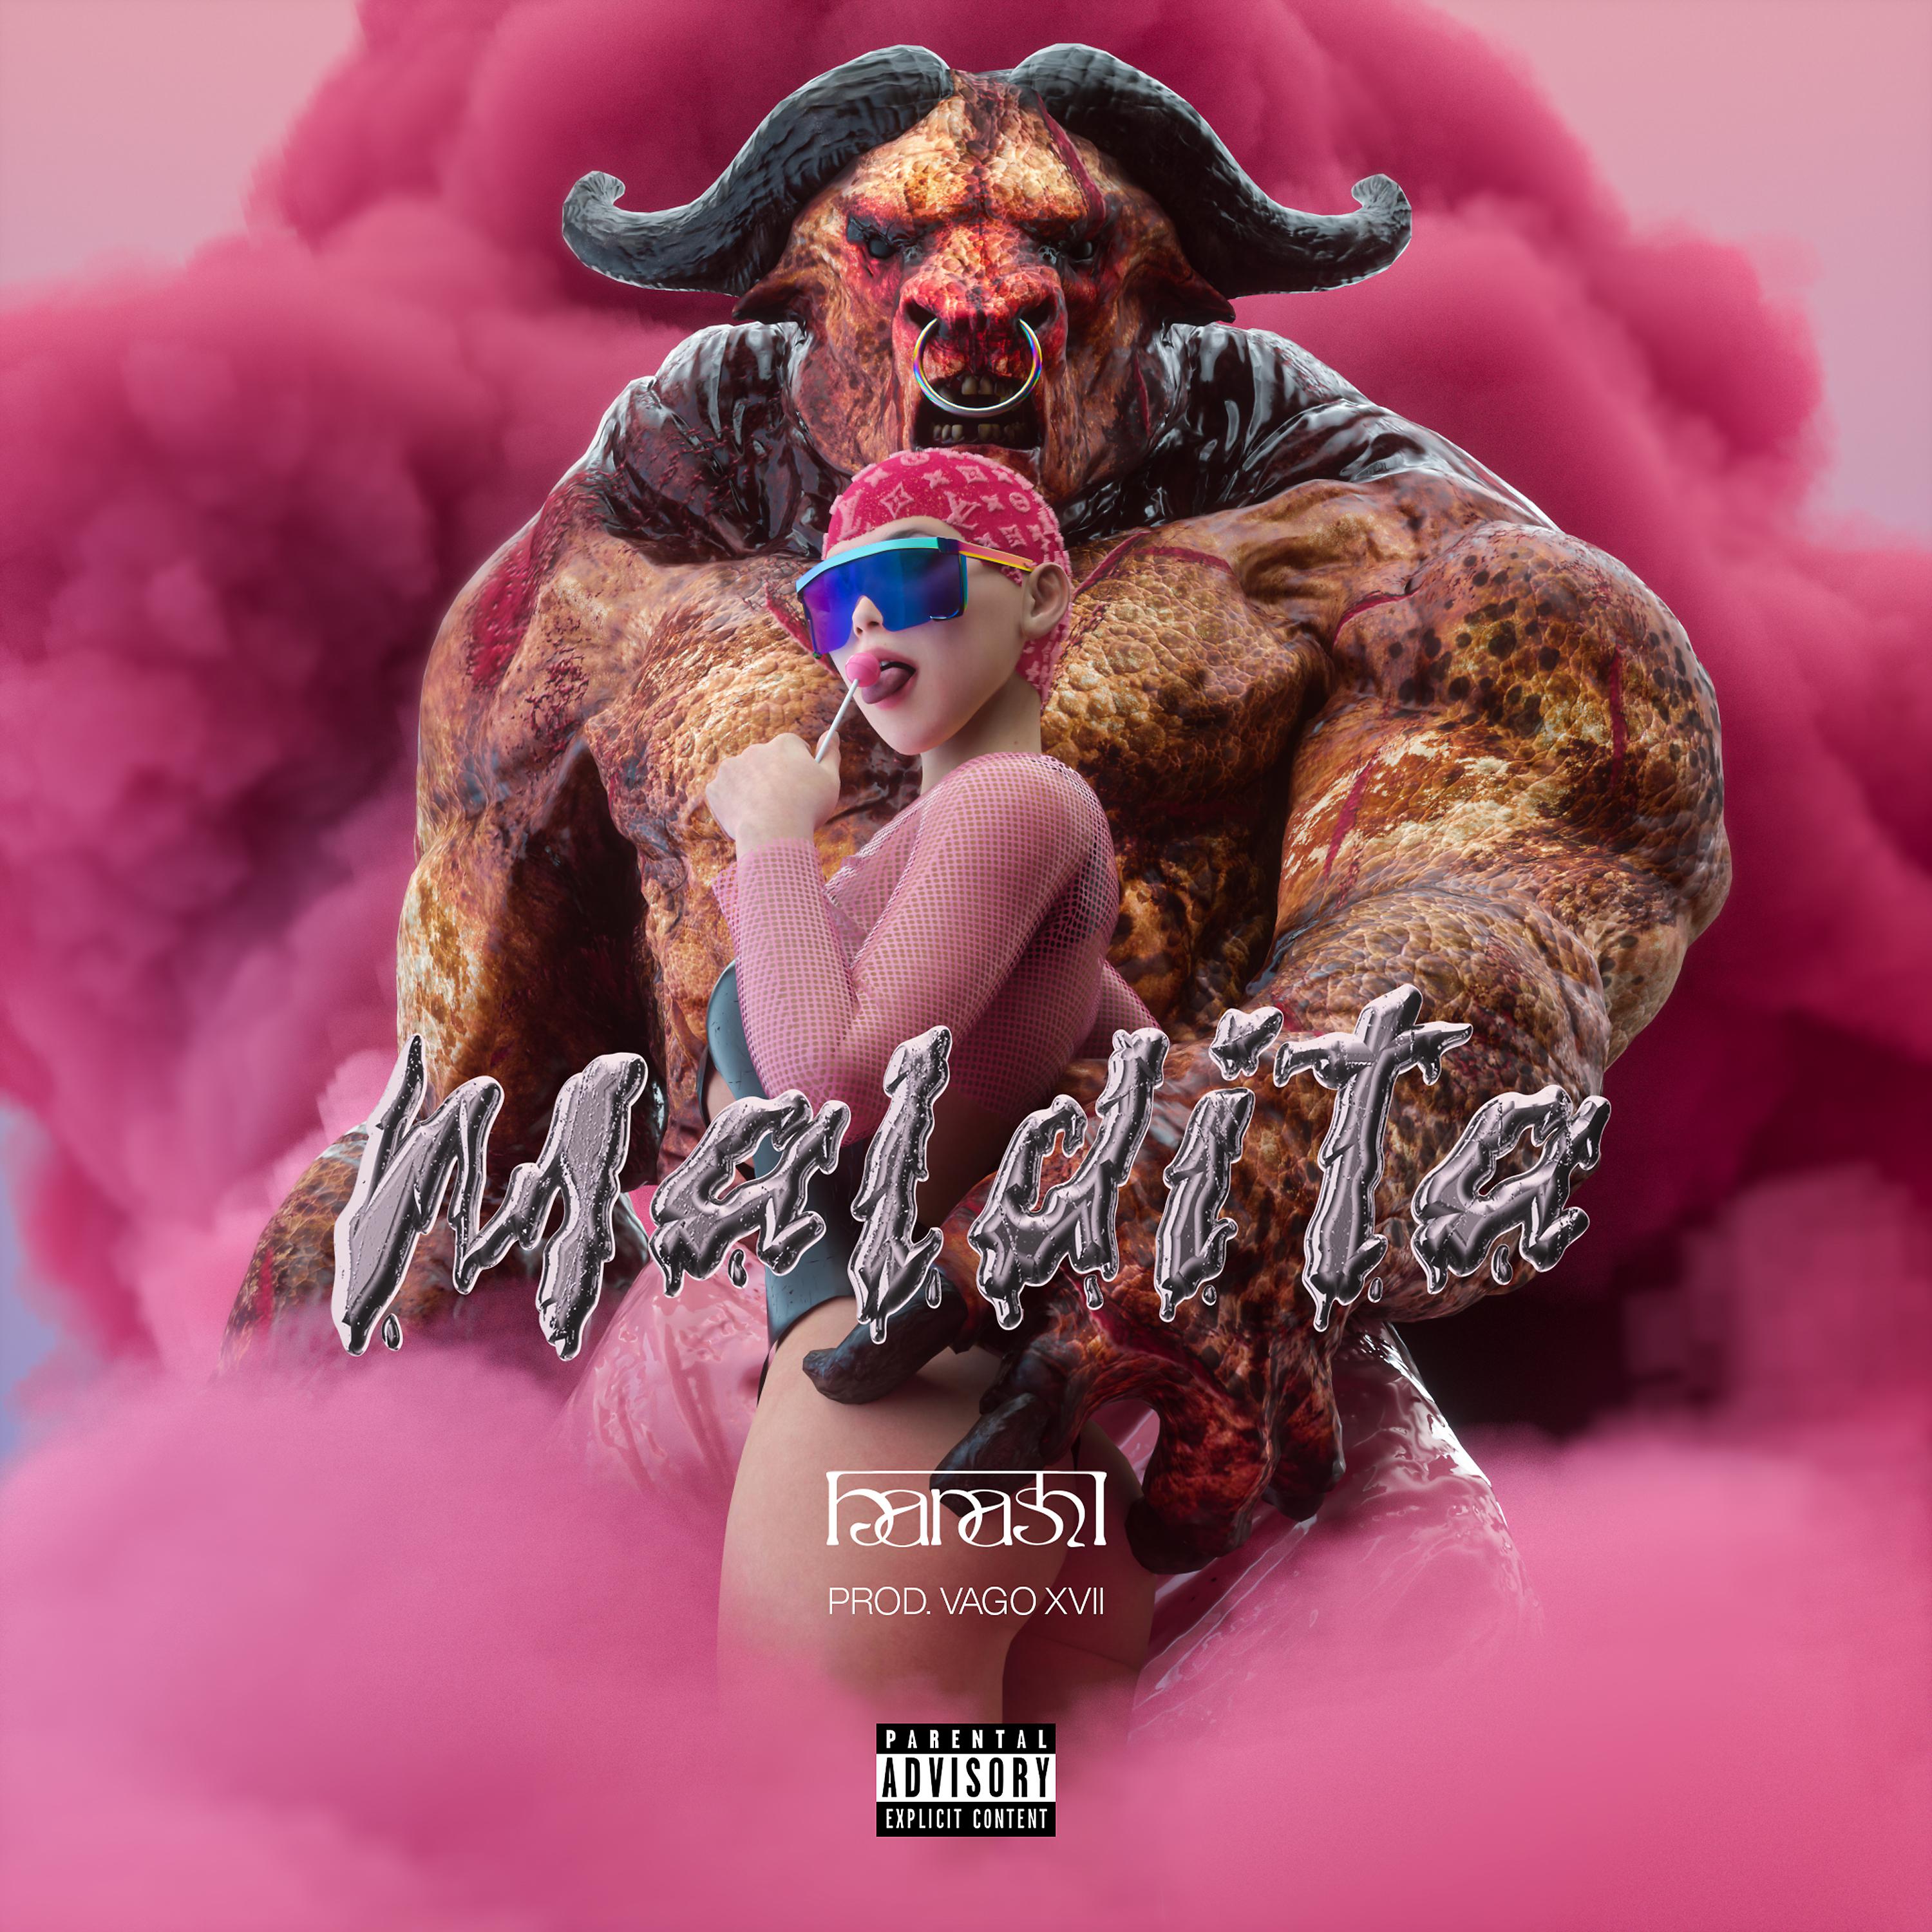 Постер альбома Maldita